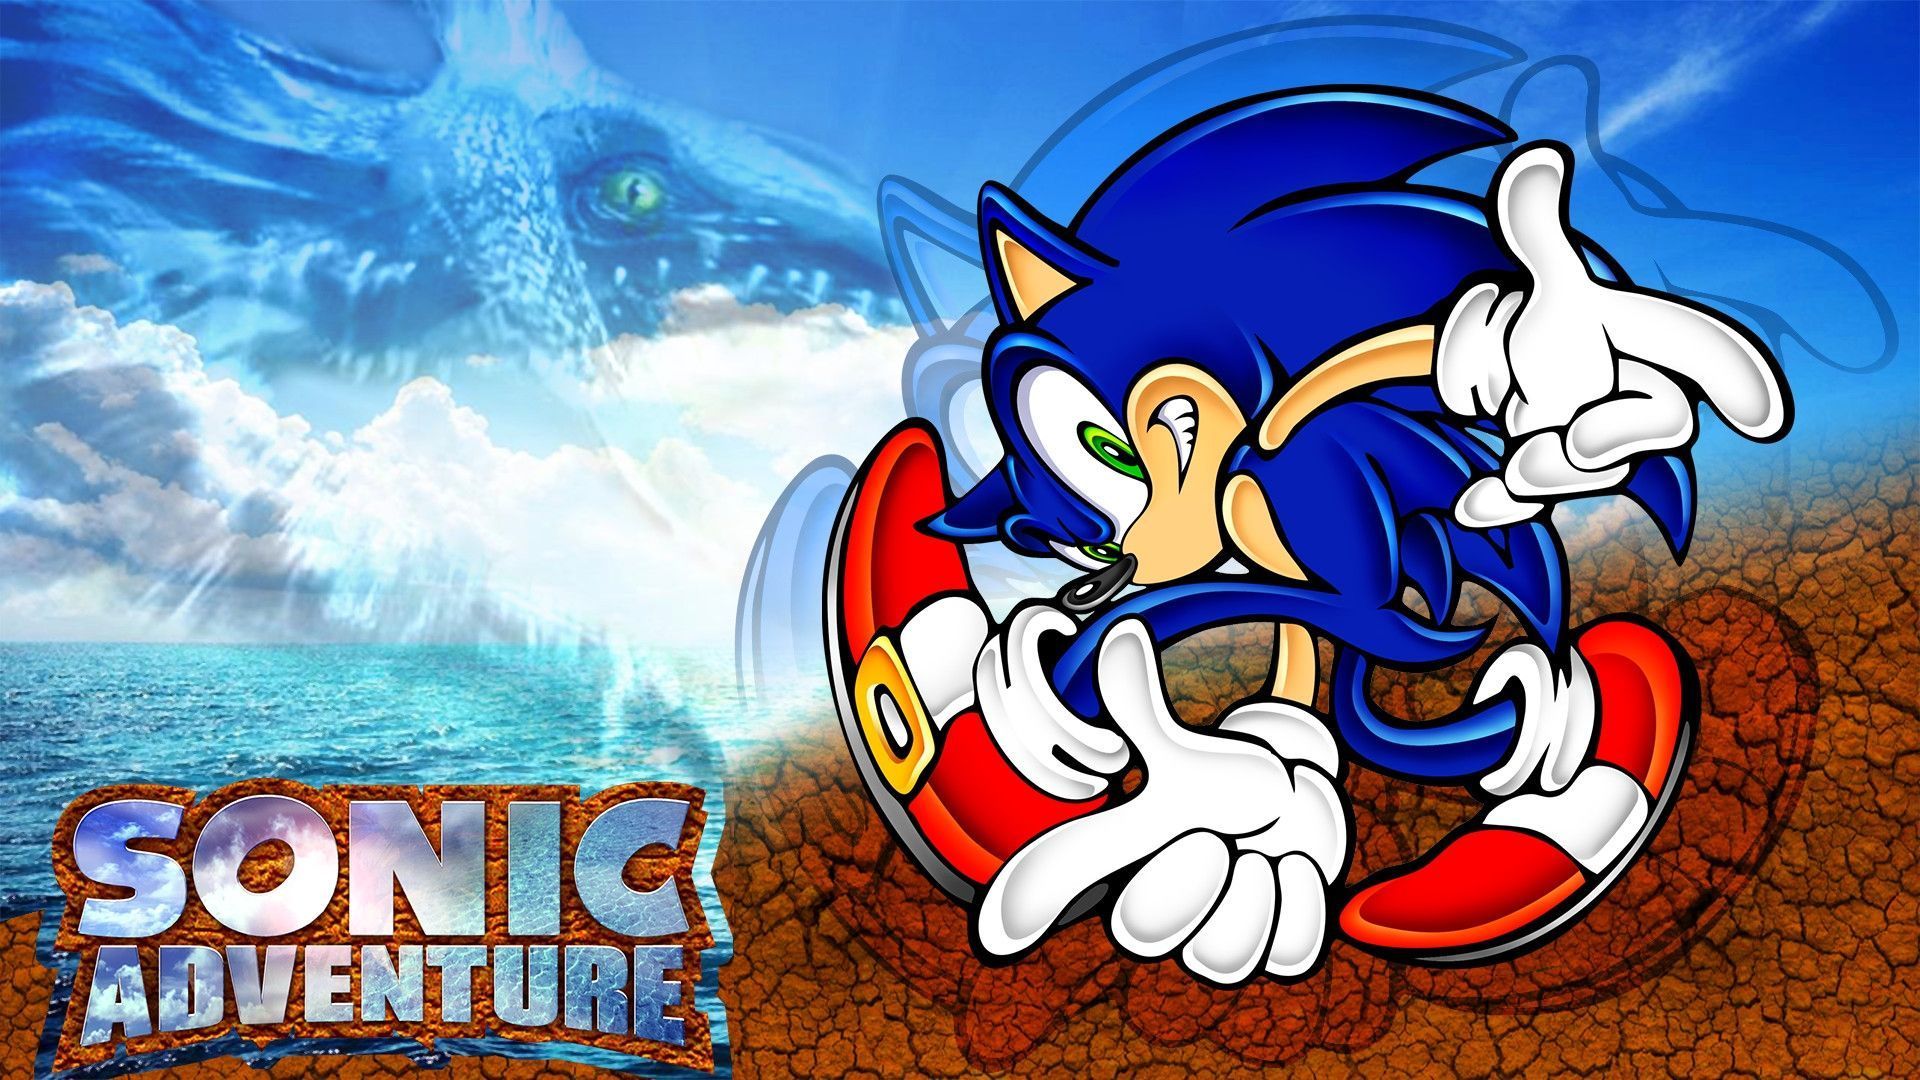 Sonic Adventure Wallpaper Free Sonic Adventure Background